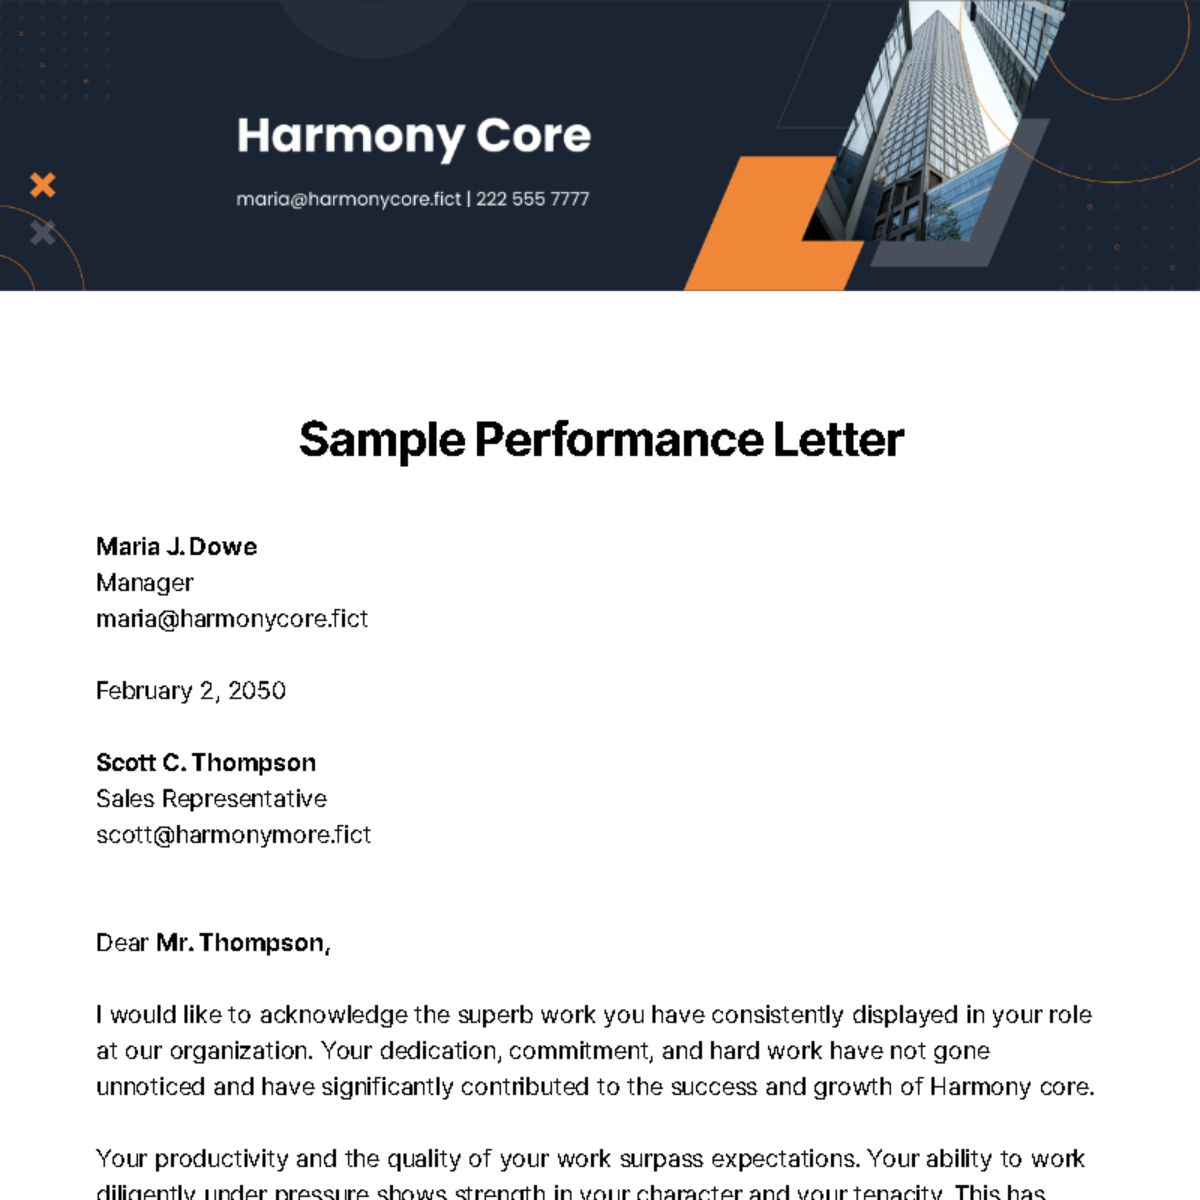 Sample Performance Letter Template